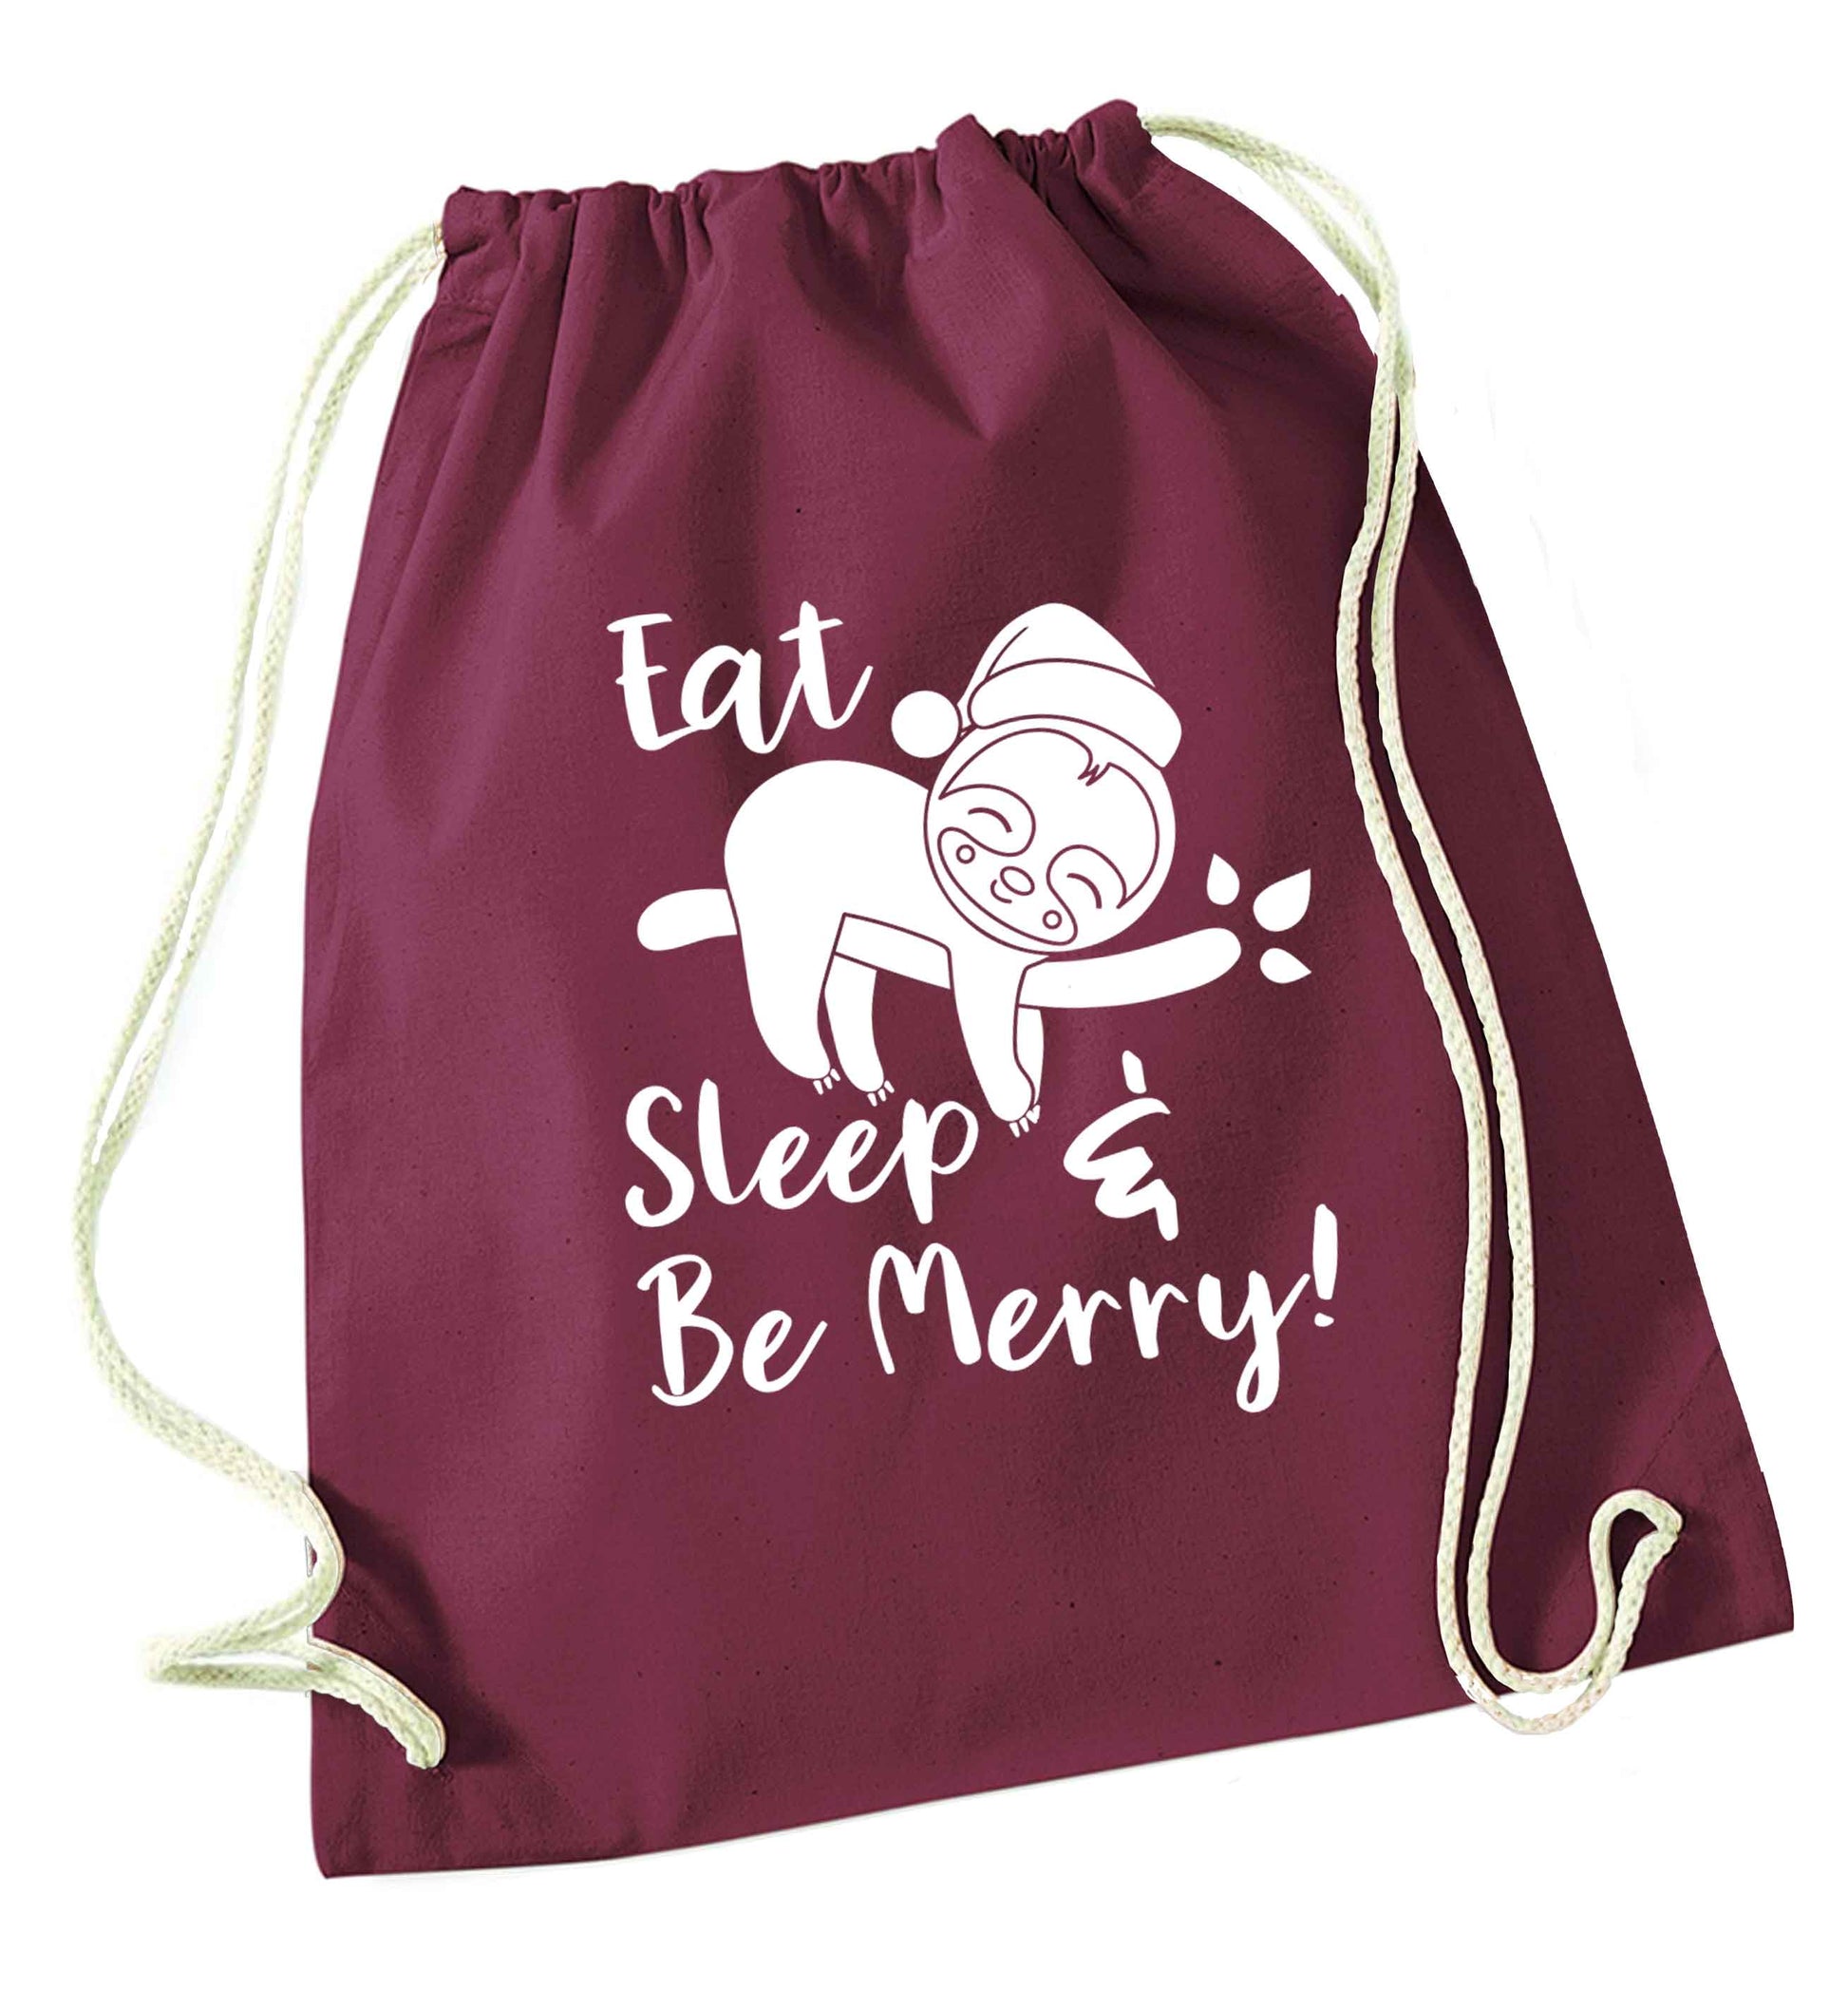 Merry Slothmas maroon drawstring bag